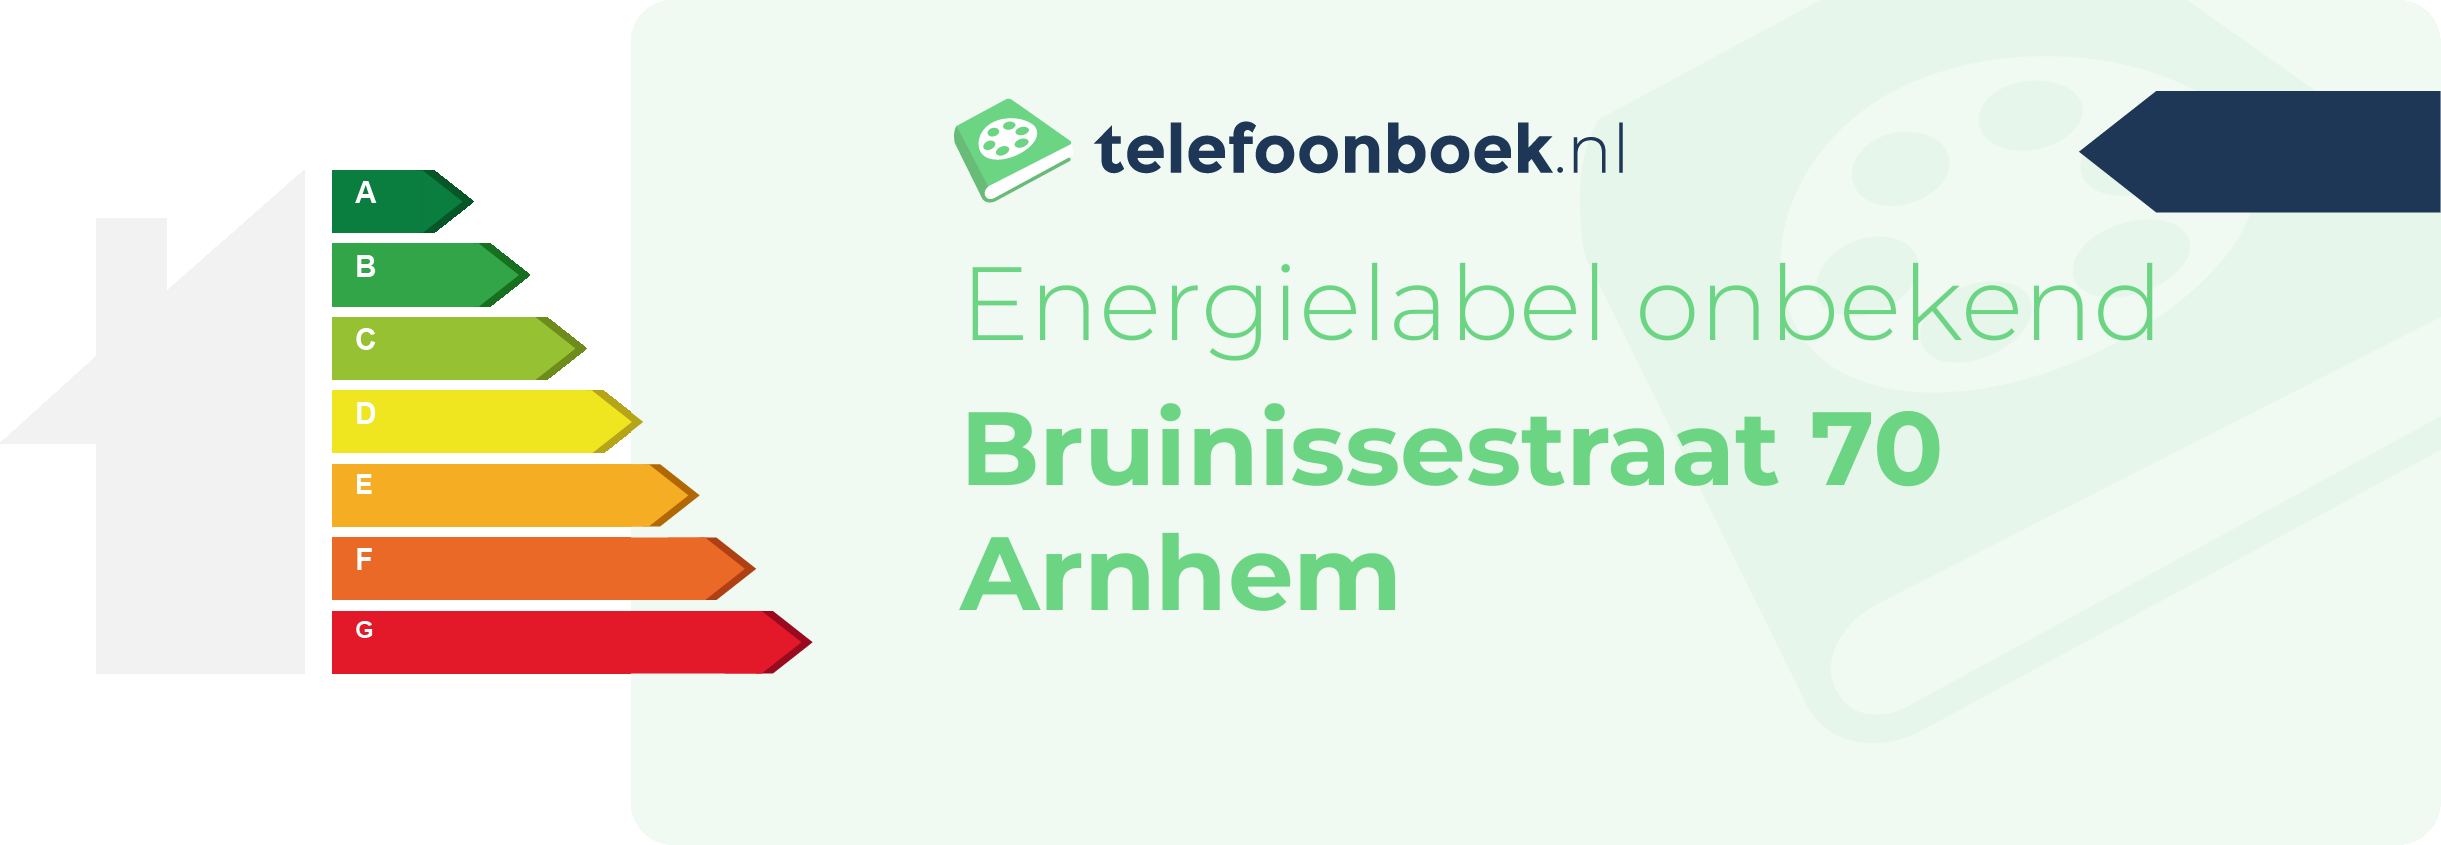 Energielabel Bruinissestraat 70 Arnhem